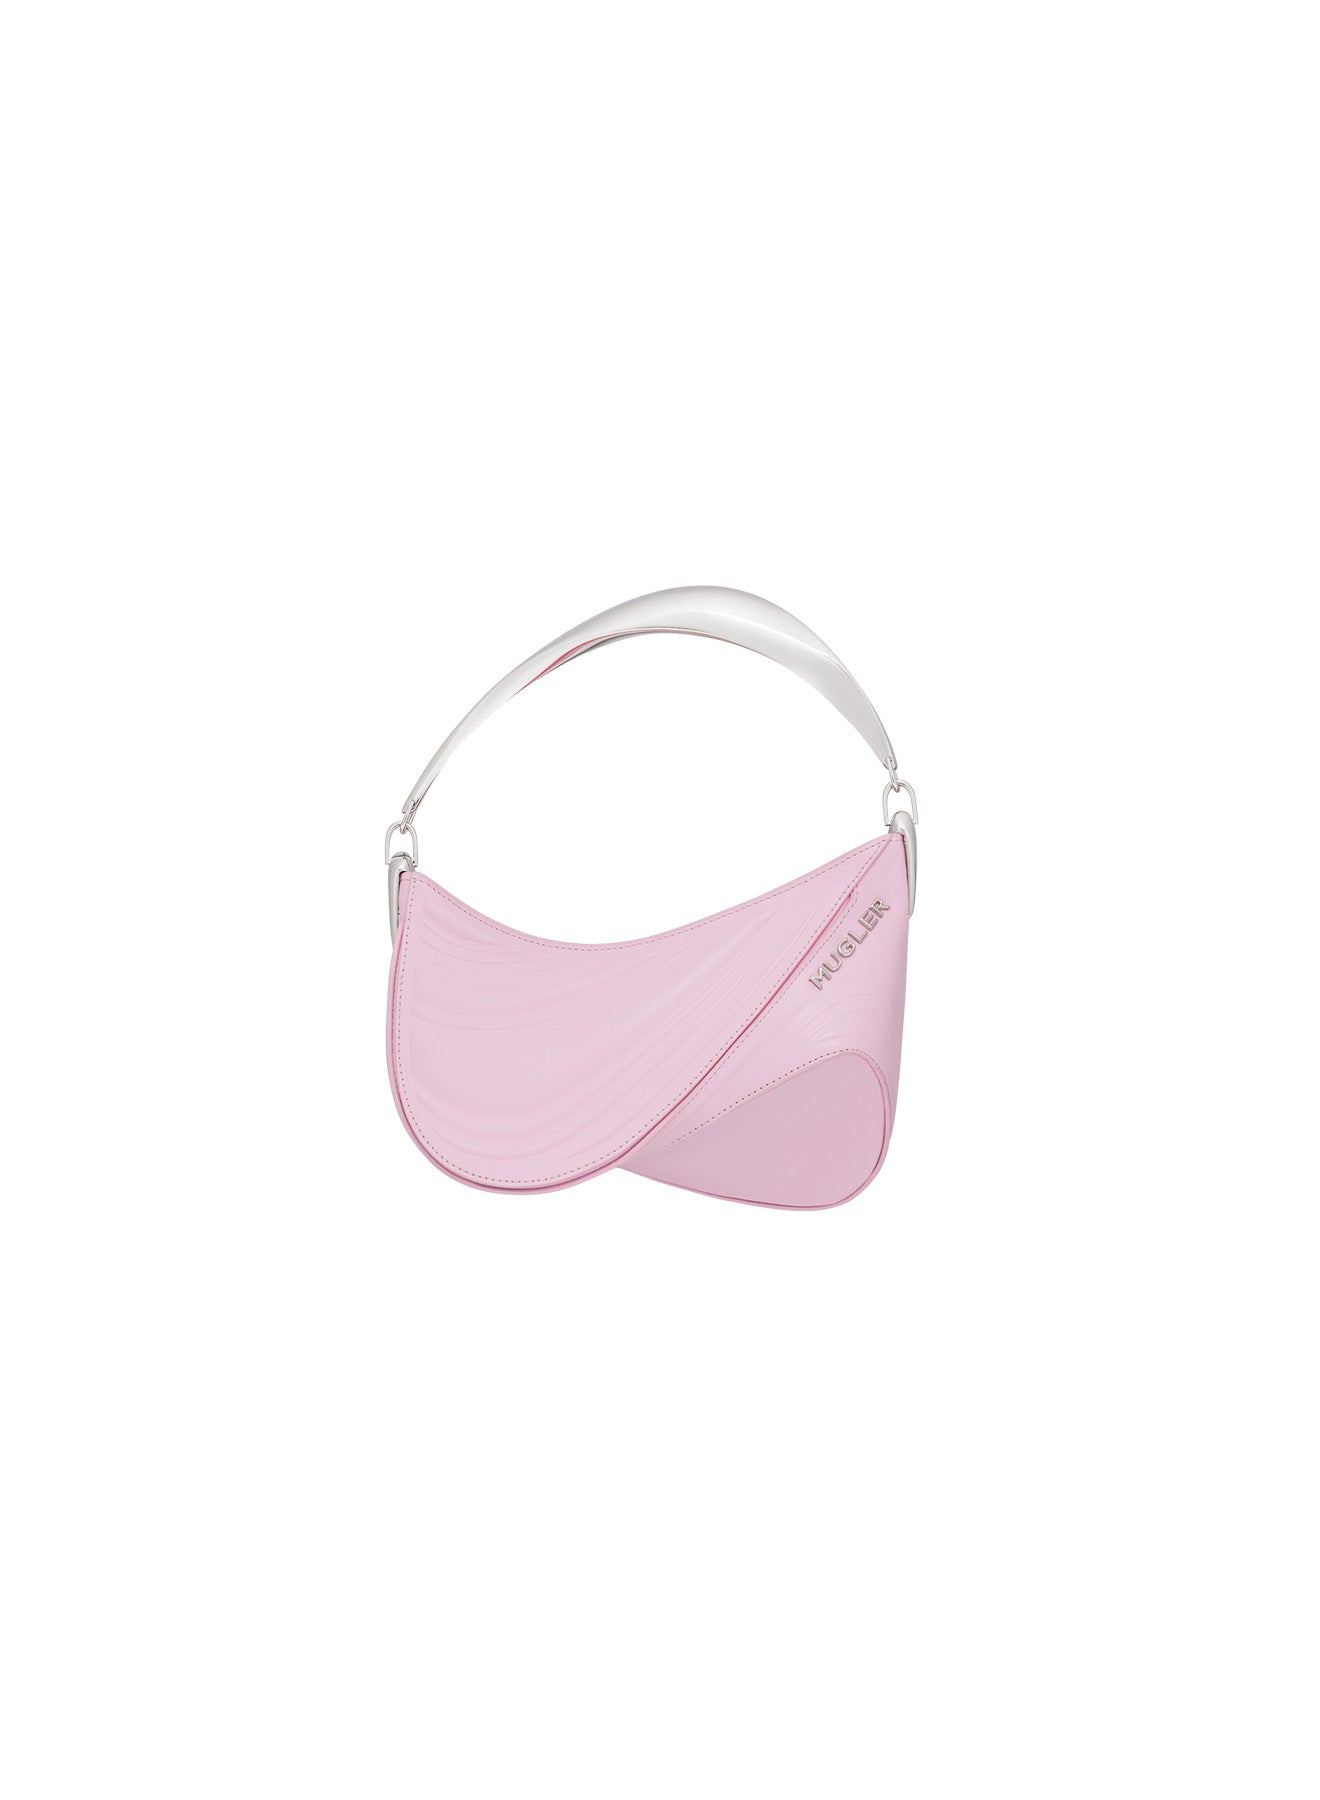 small pink bag